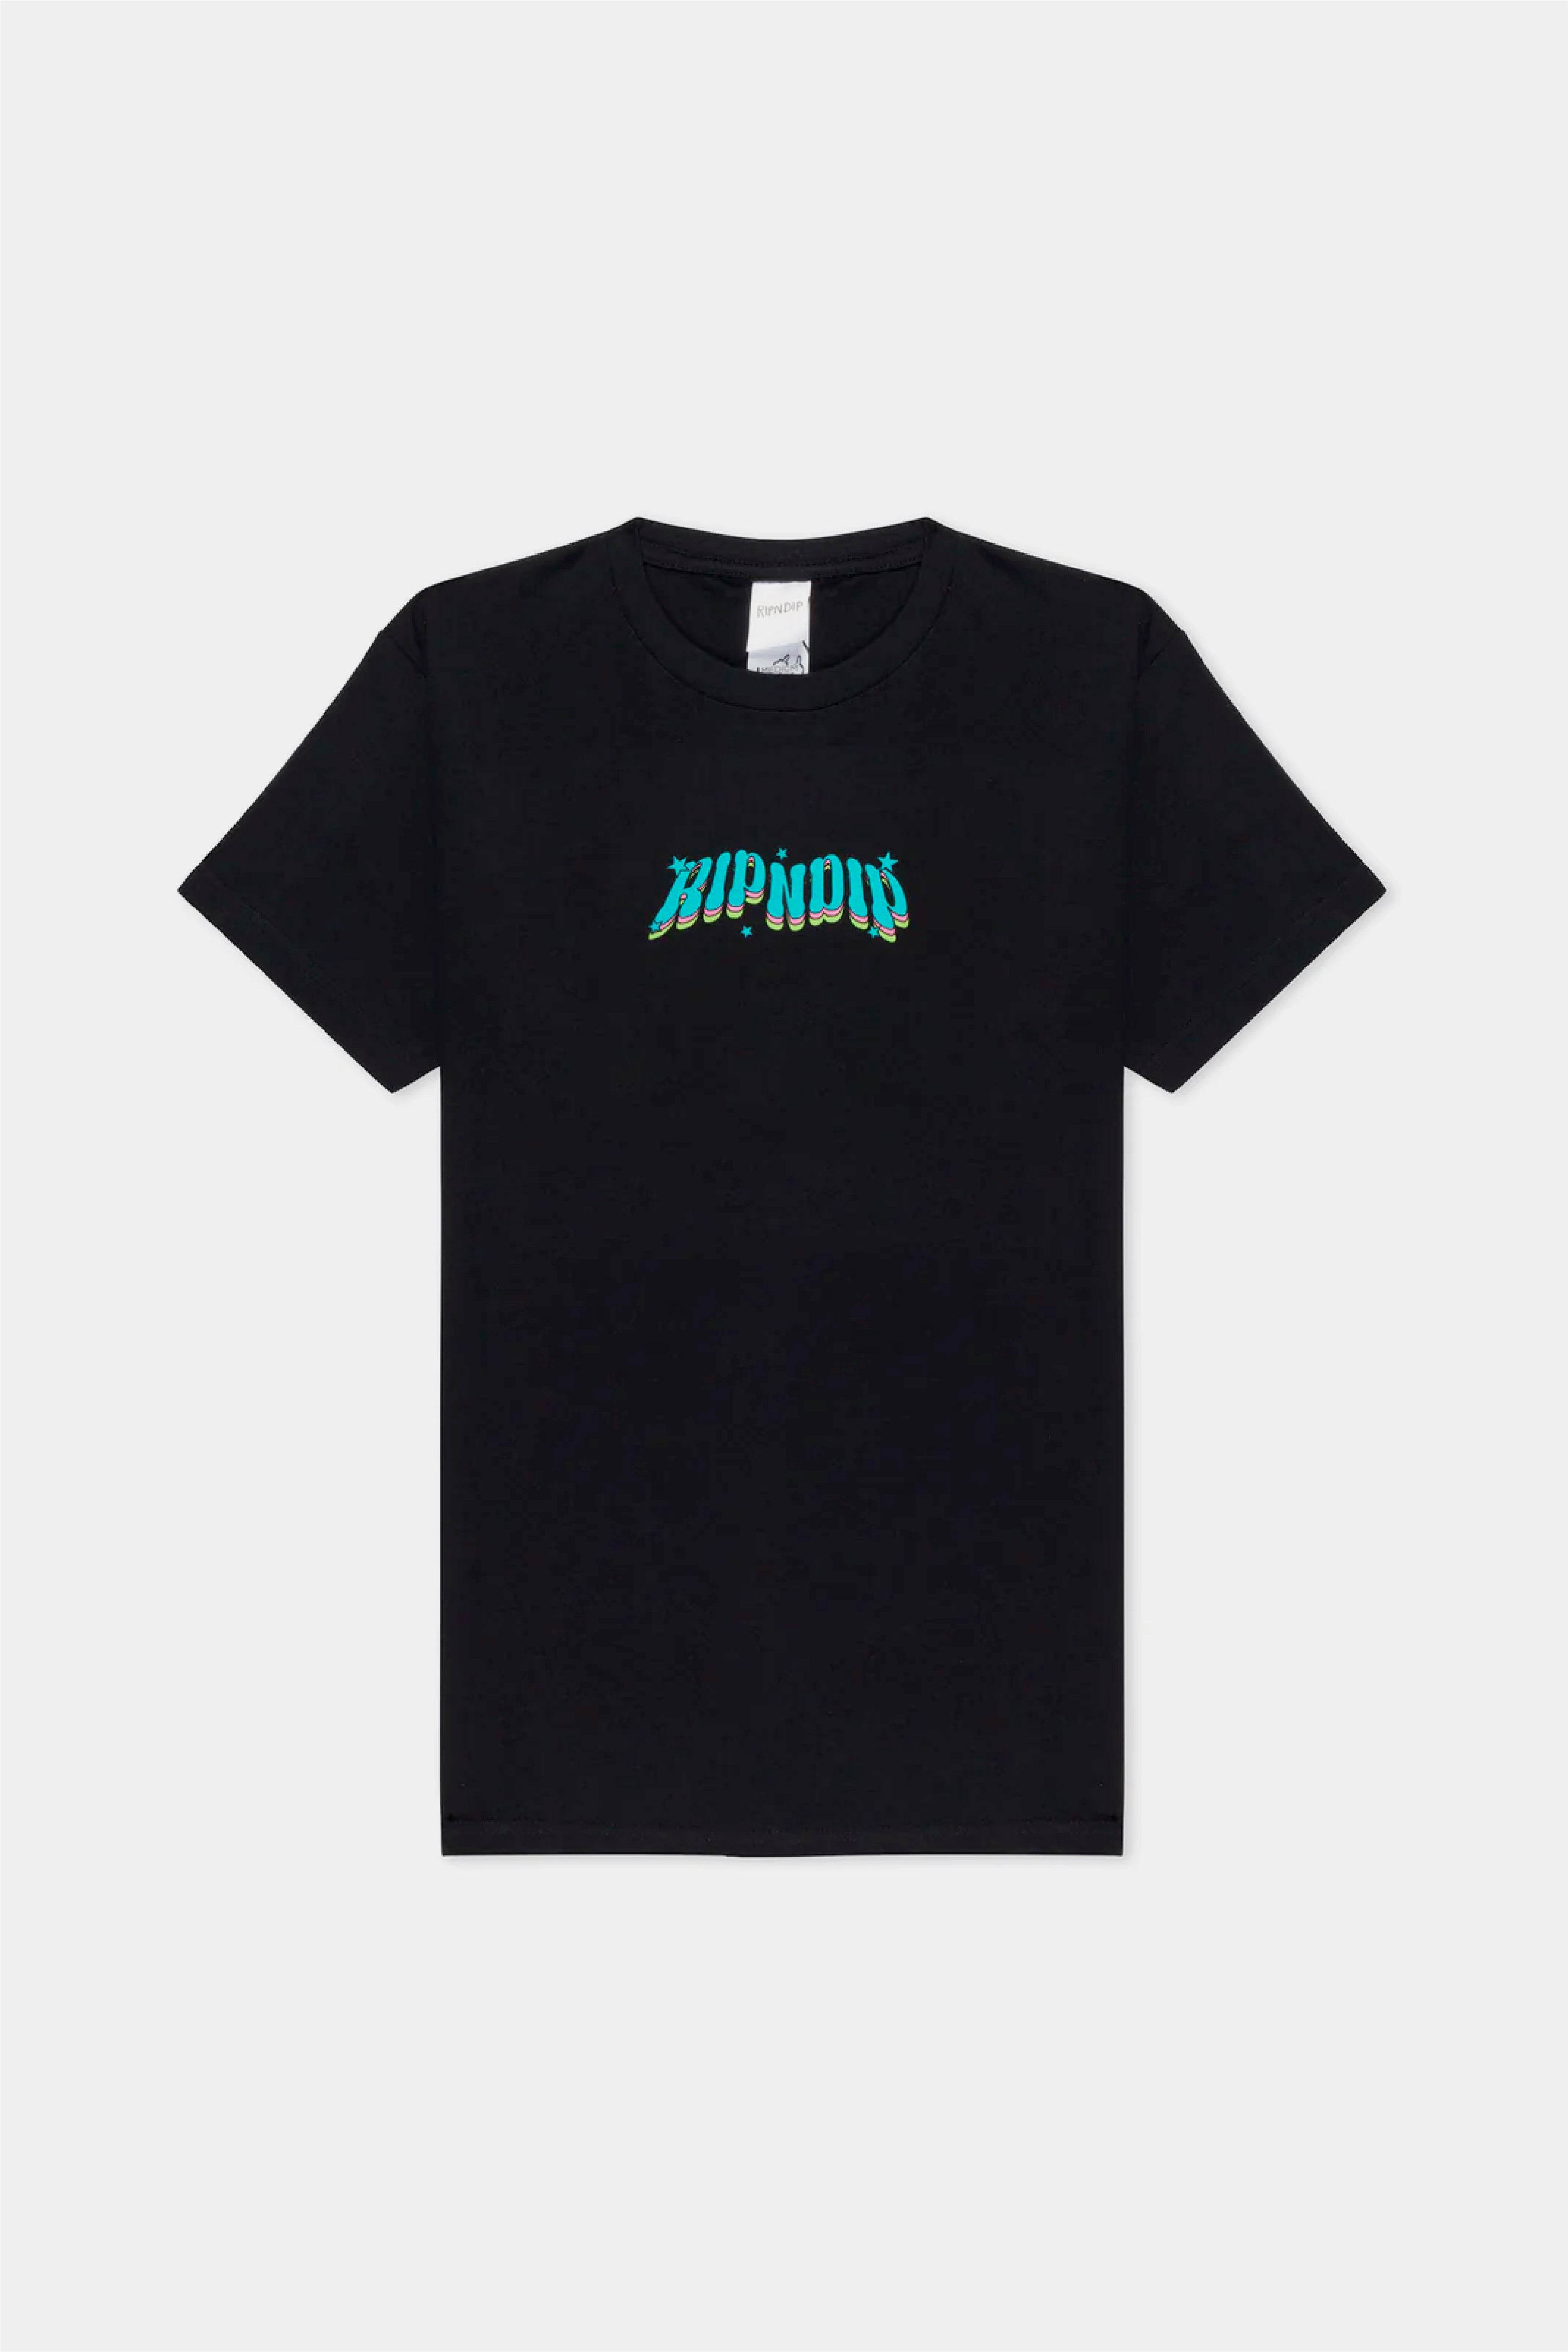 Selectshop FRAME - RIPNDIP Tears To Heaven Tee T-Shirts Concept Store Dubai